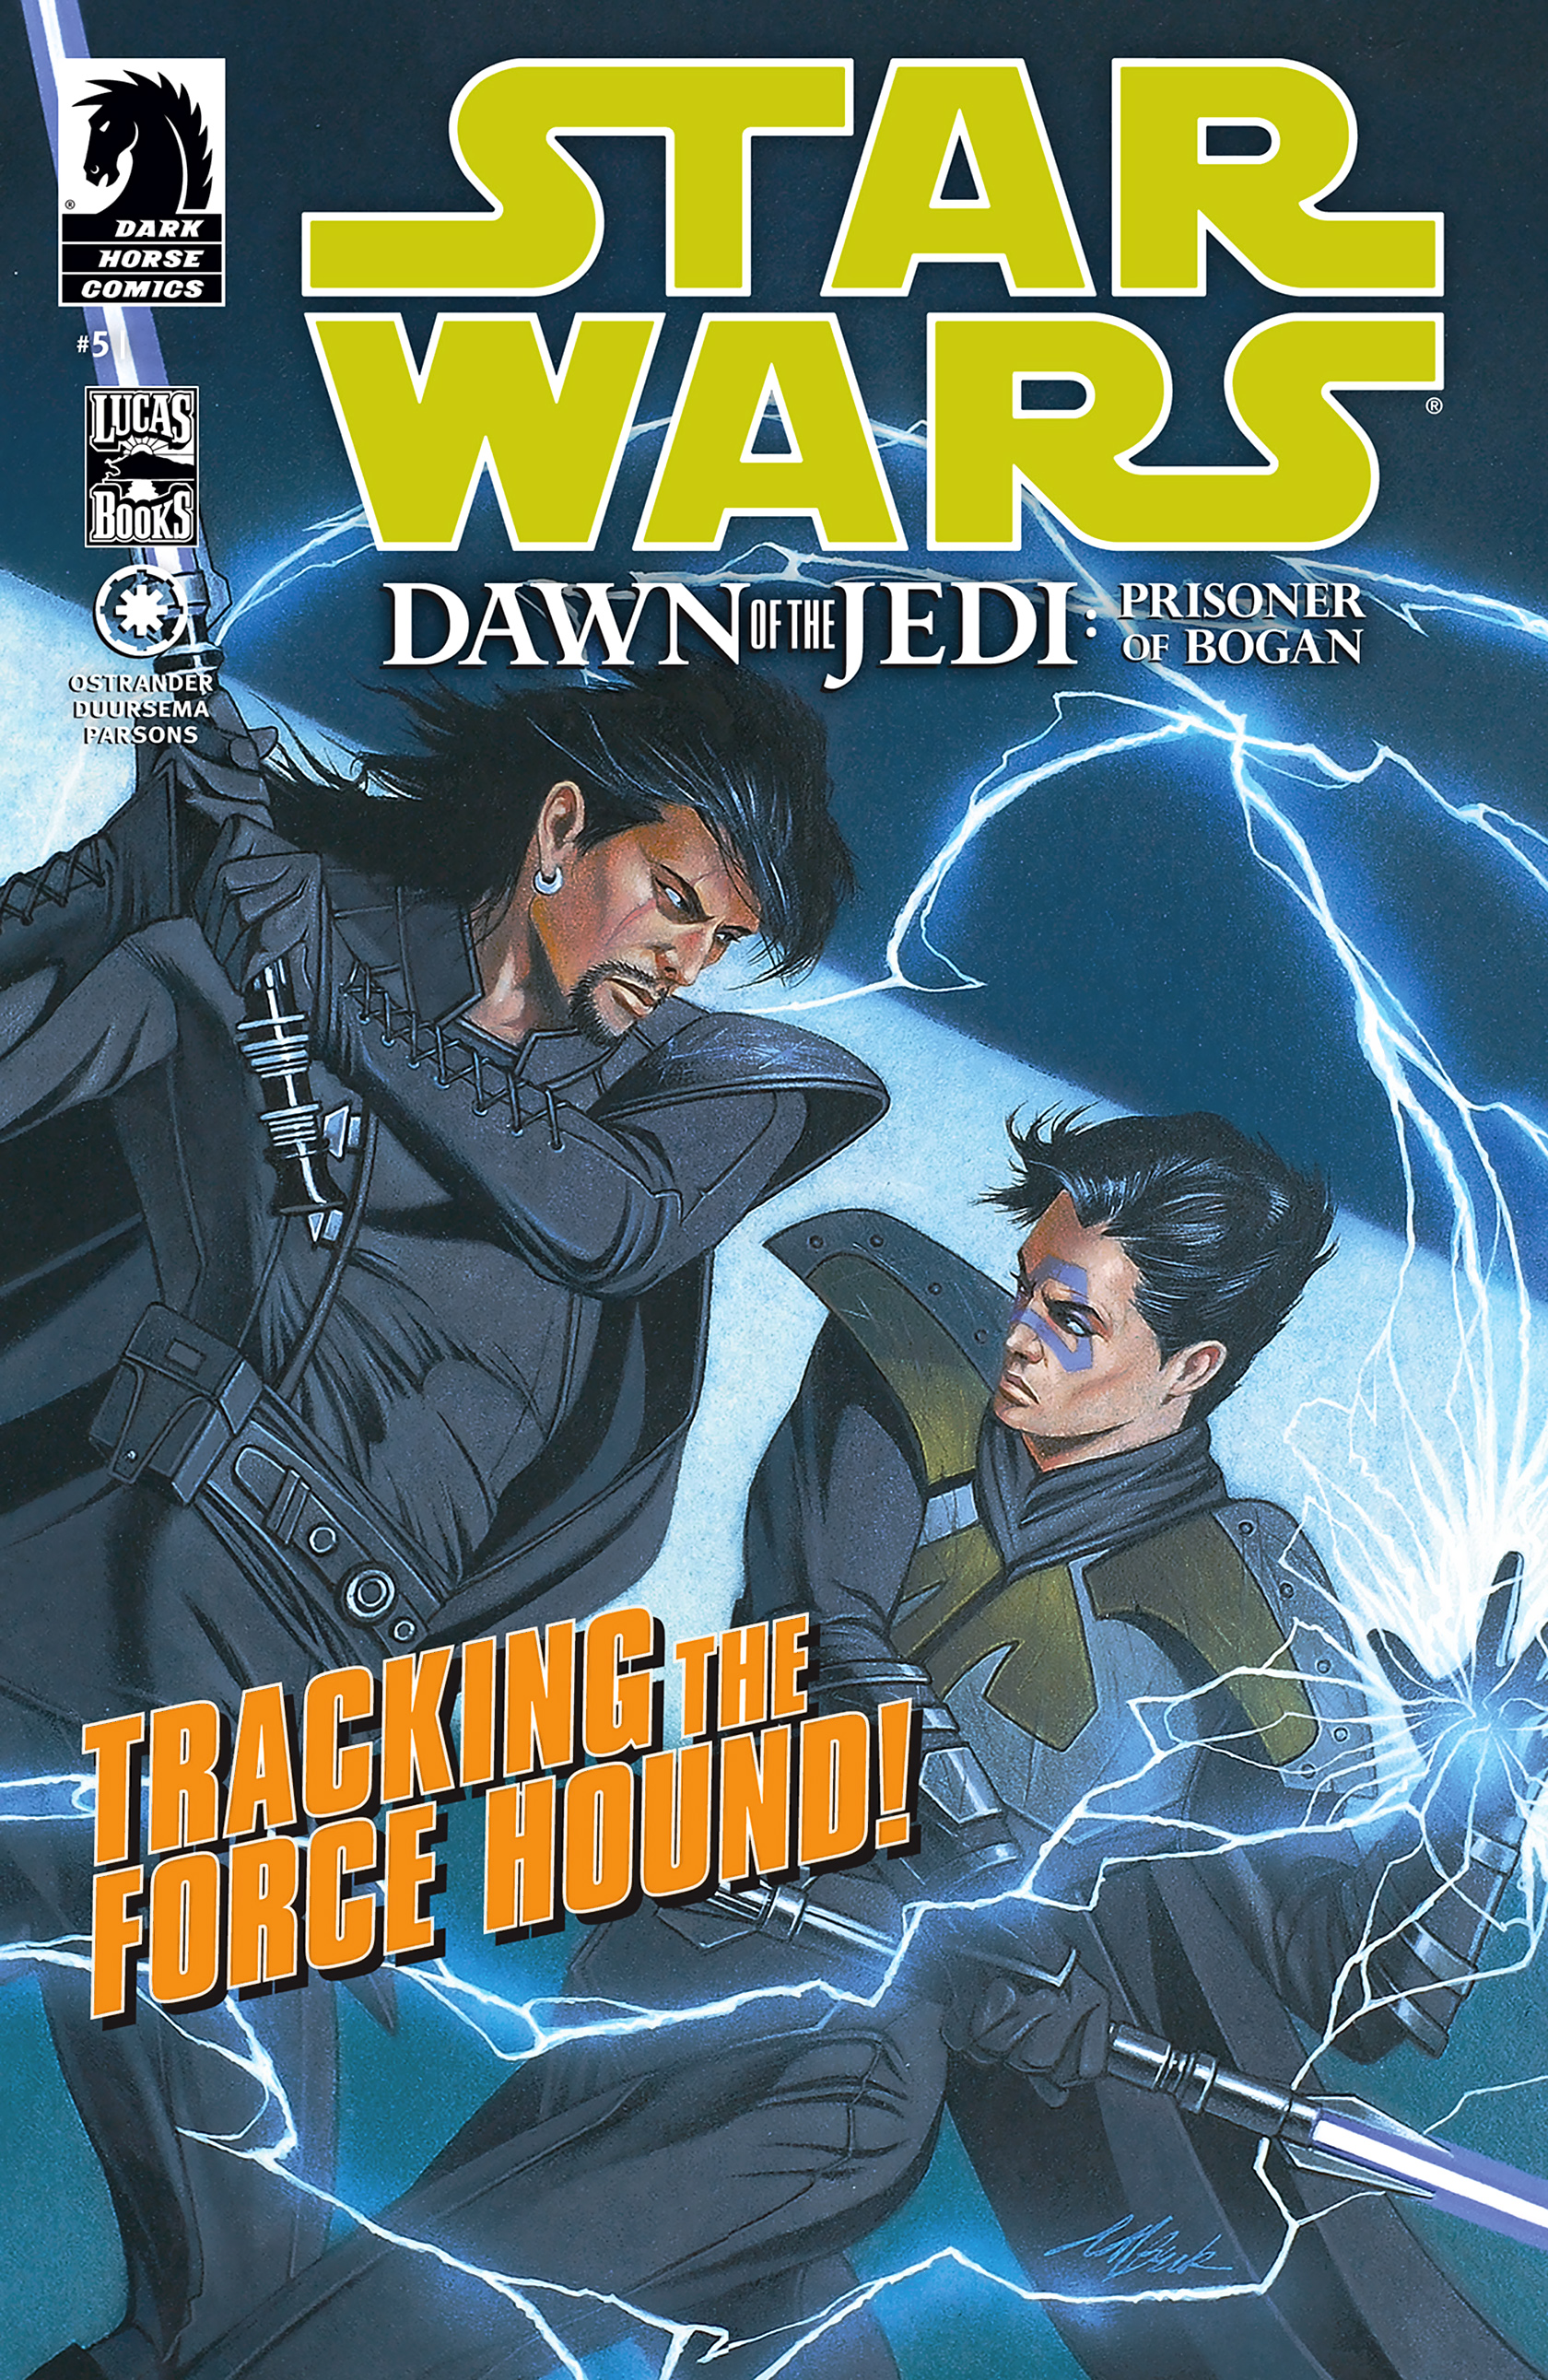 Read online Star Wars: Dawn of the Jedi - Prisoner of Bogan comic -  Issue #5 - 1